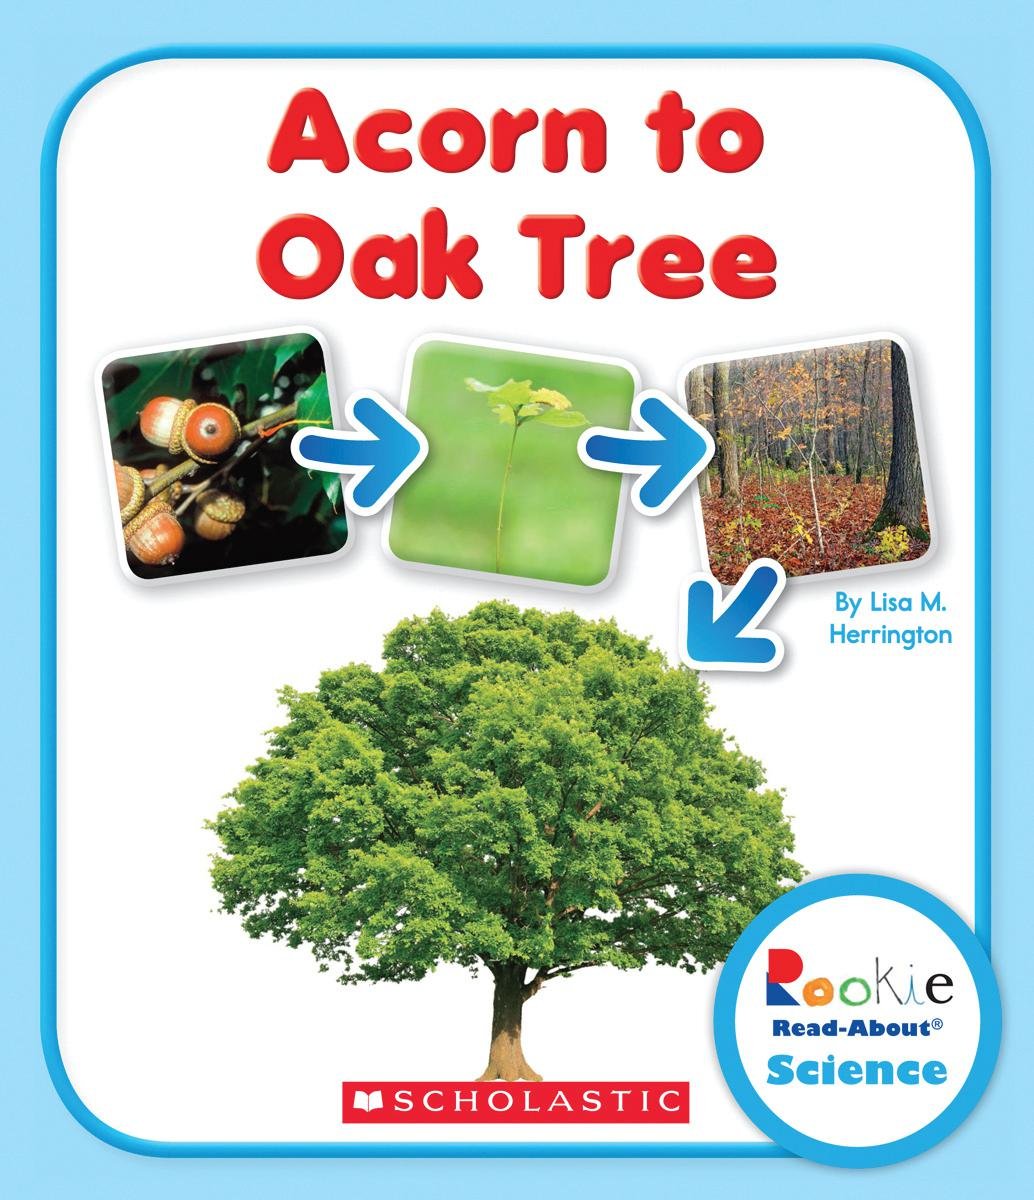 Acorn to Oak Tree book cover